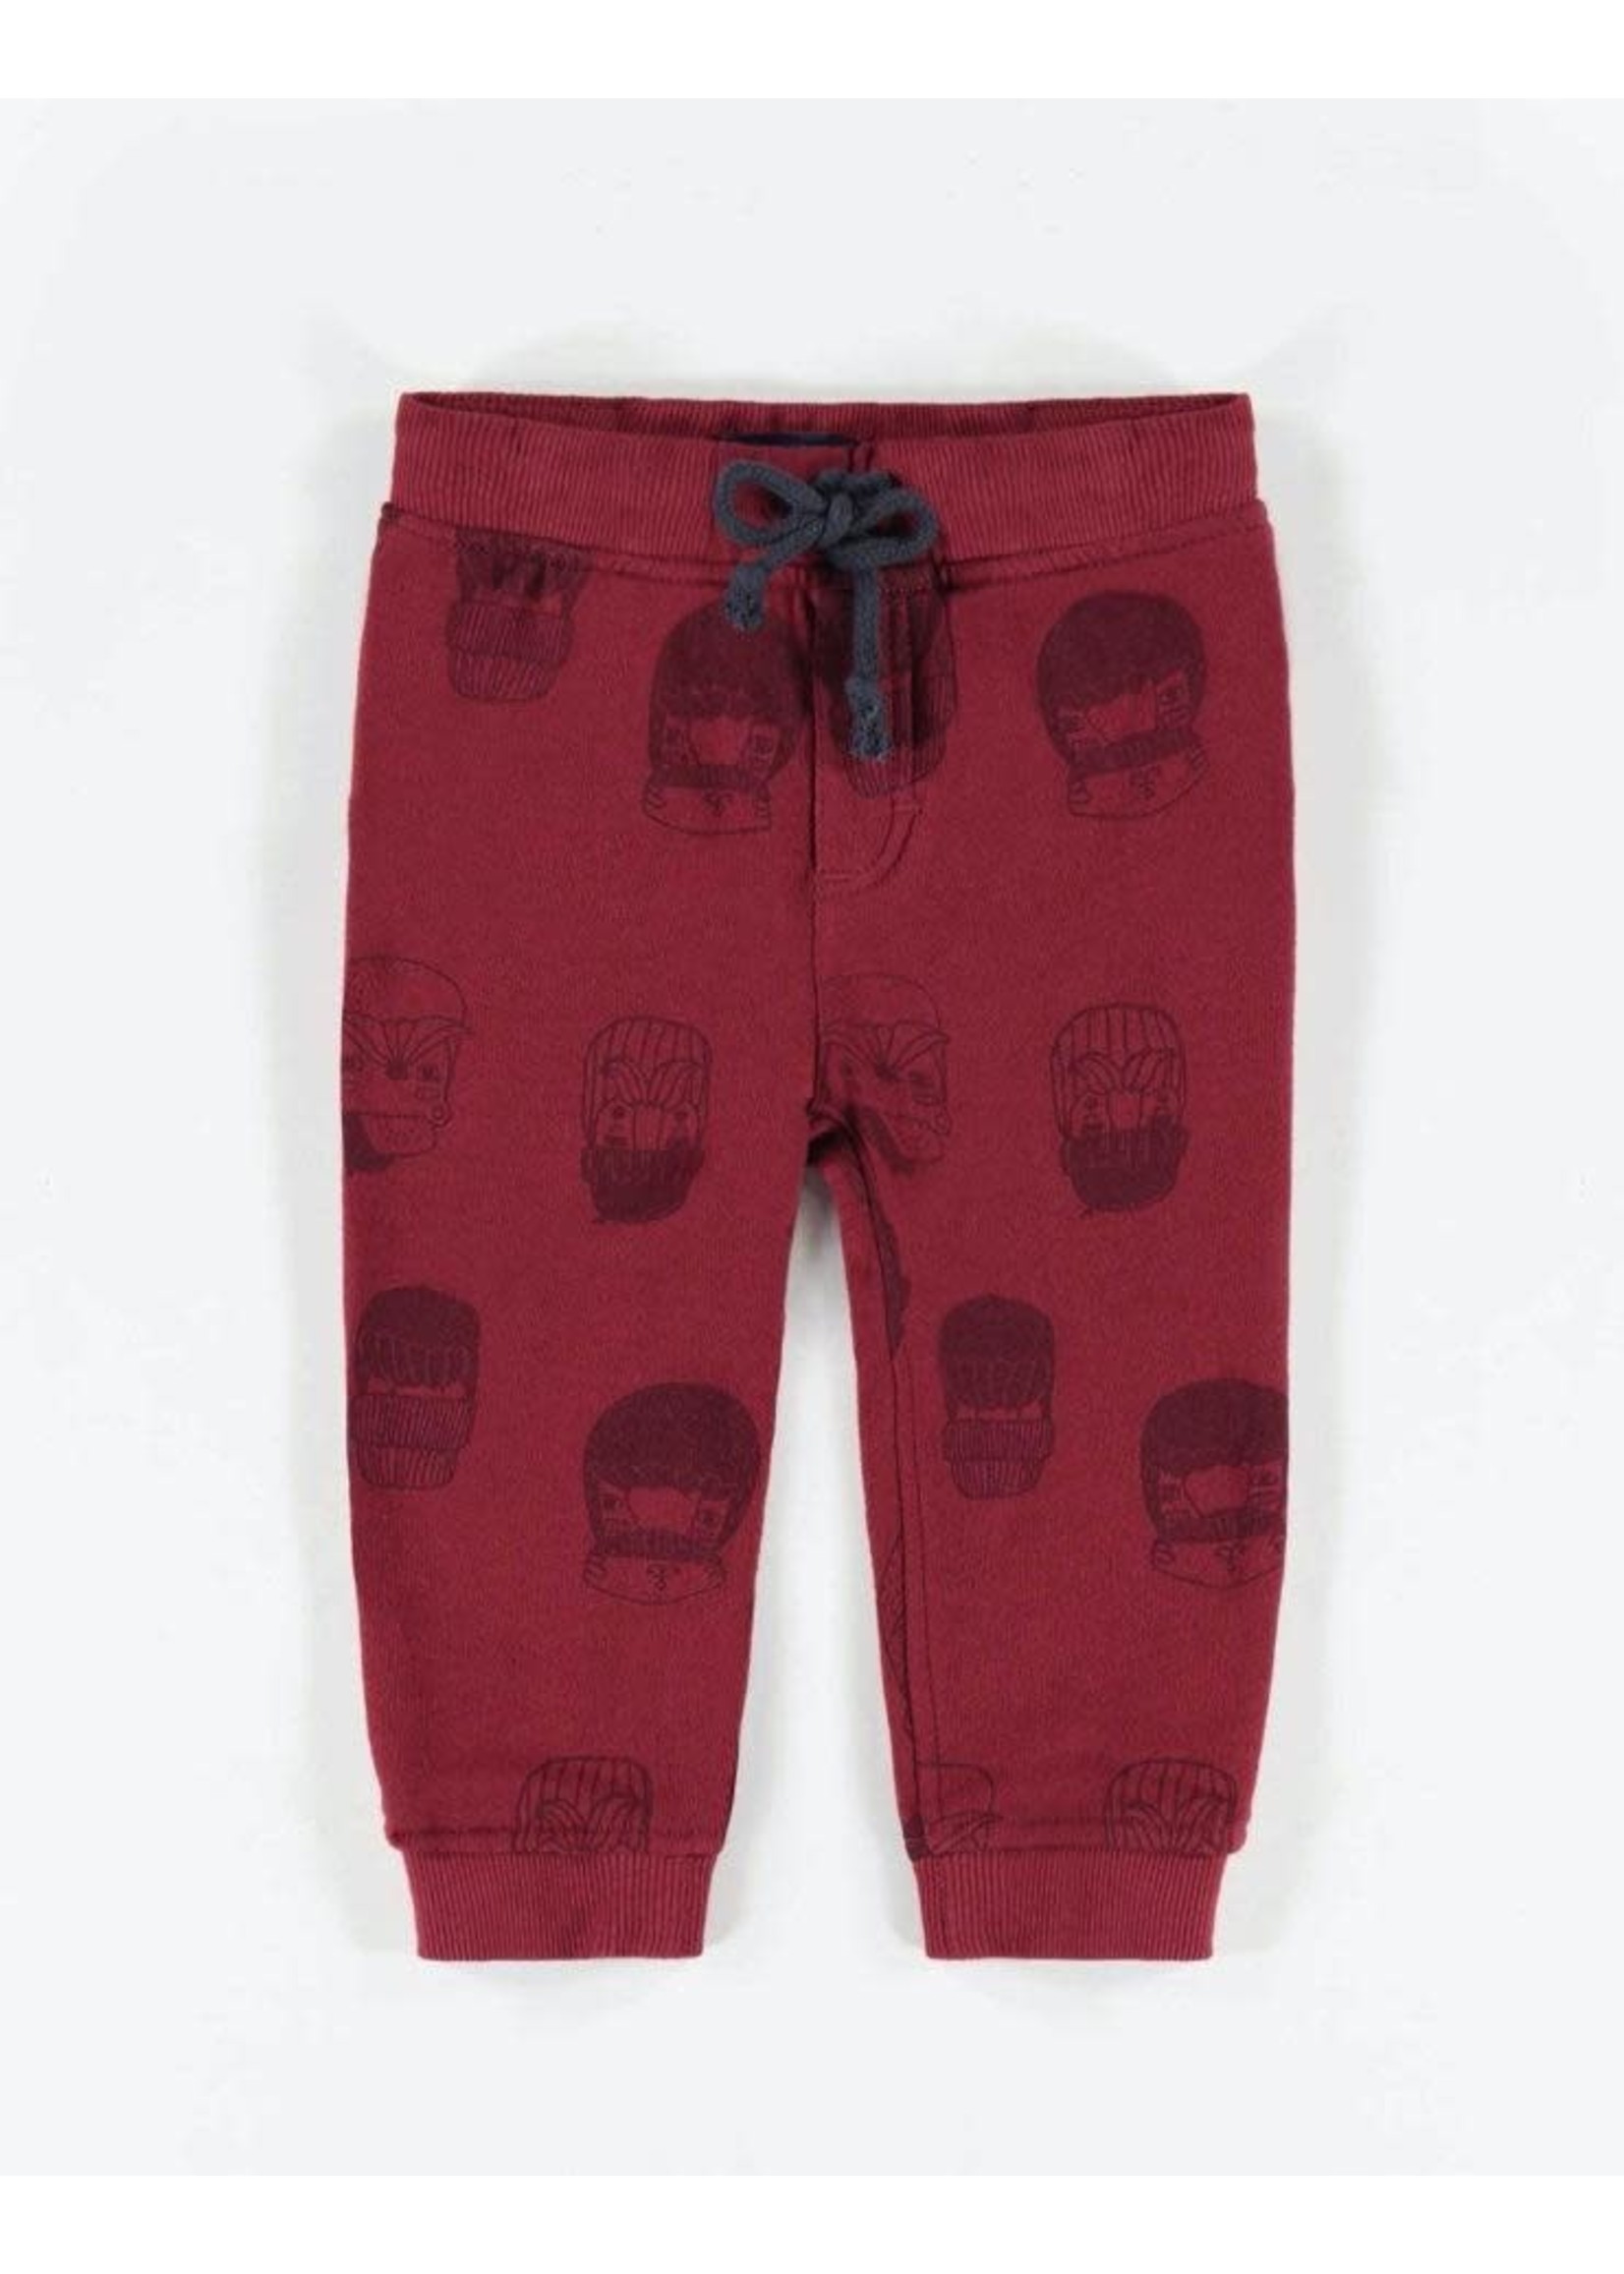 Souris Mini souris mini, Red Patterned Knit Cotton Pants